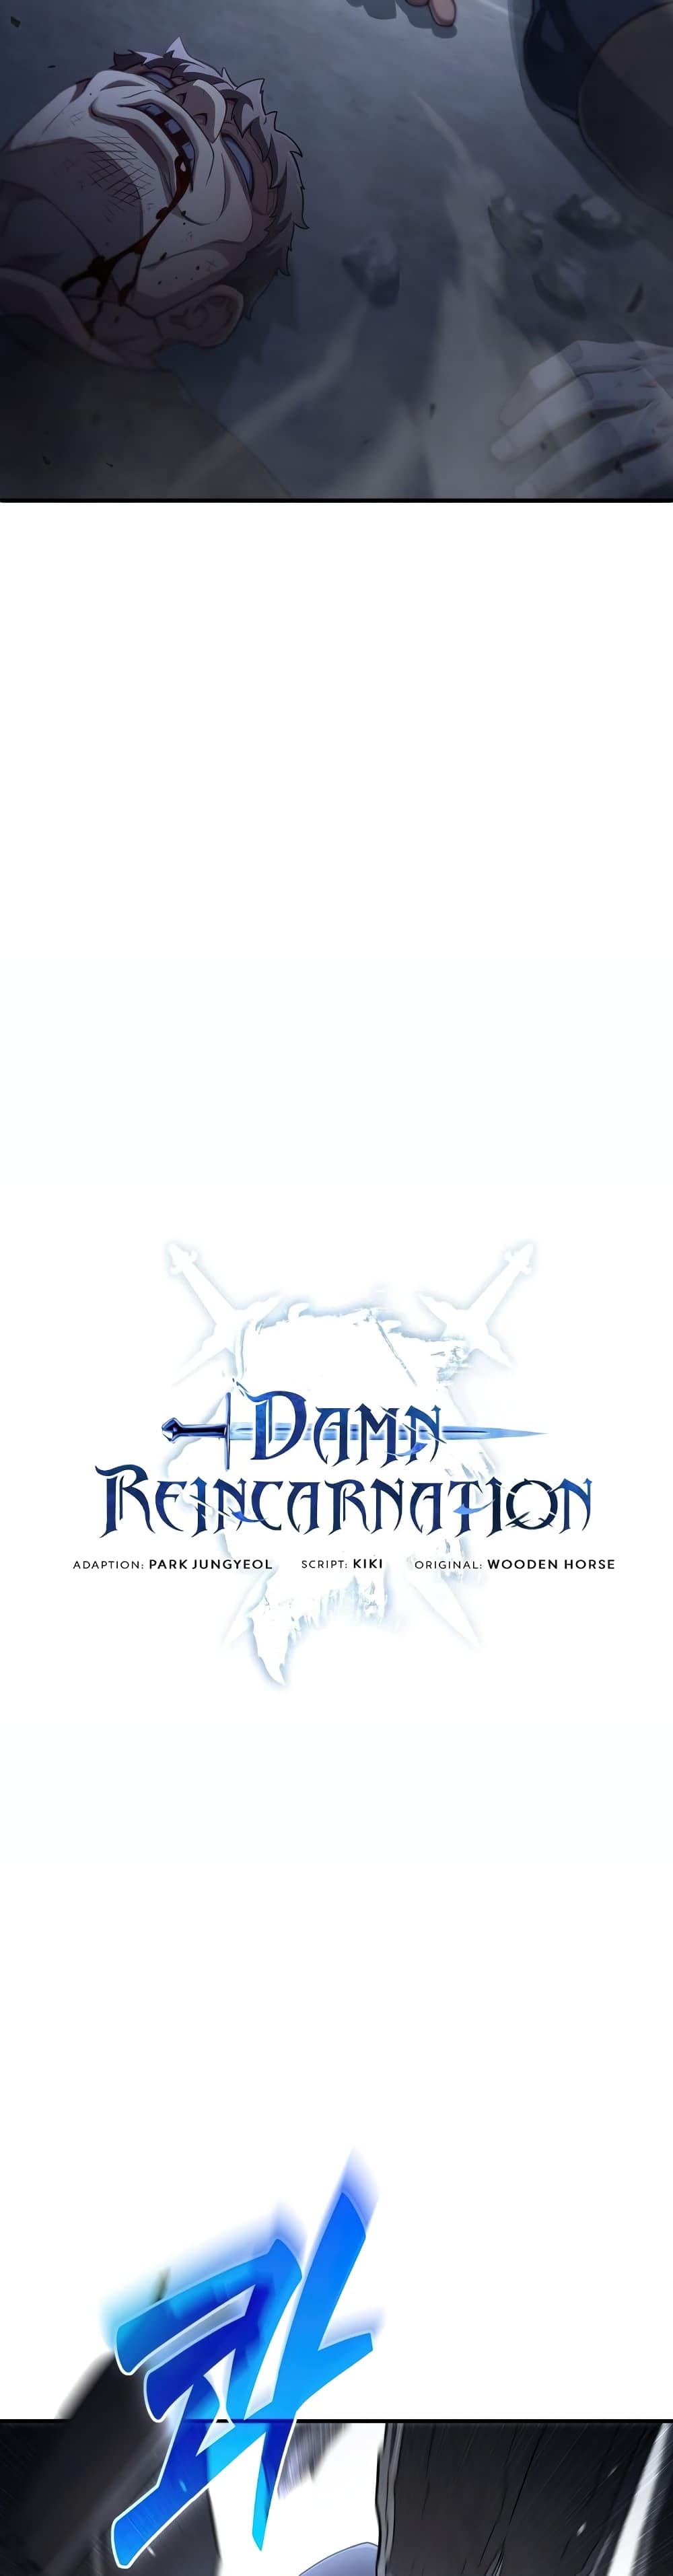 Damn Reincarnation 29-29